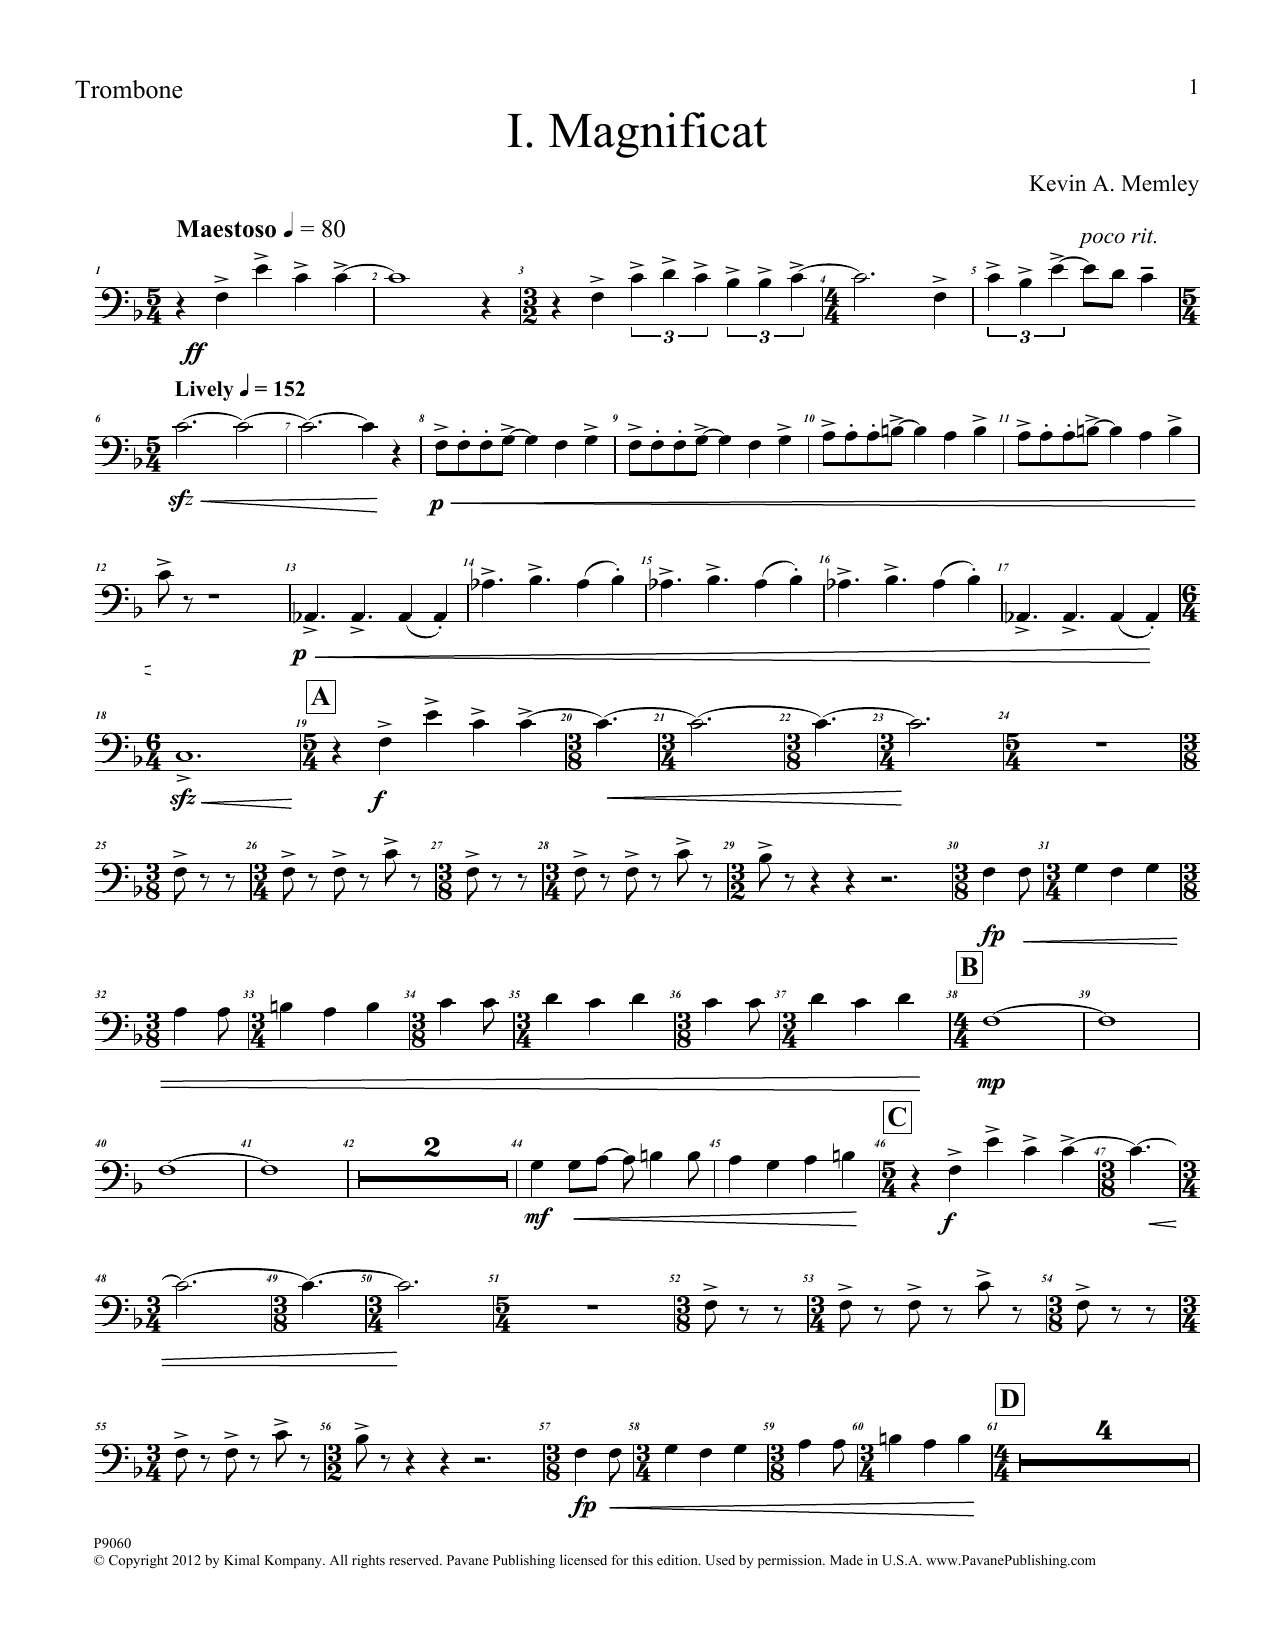 Kevin Memley Magnificat (Brass Quintet) (Parts) - Trombone Sheet Music Notes & Chords for Choir Instrumental Pak - Download or Print PDF